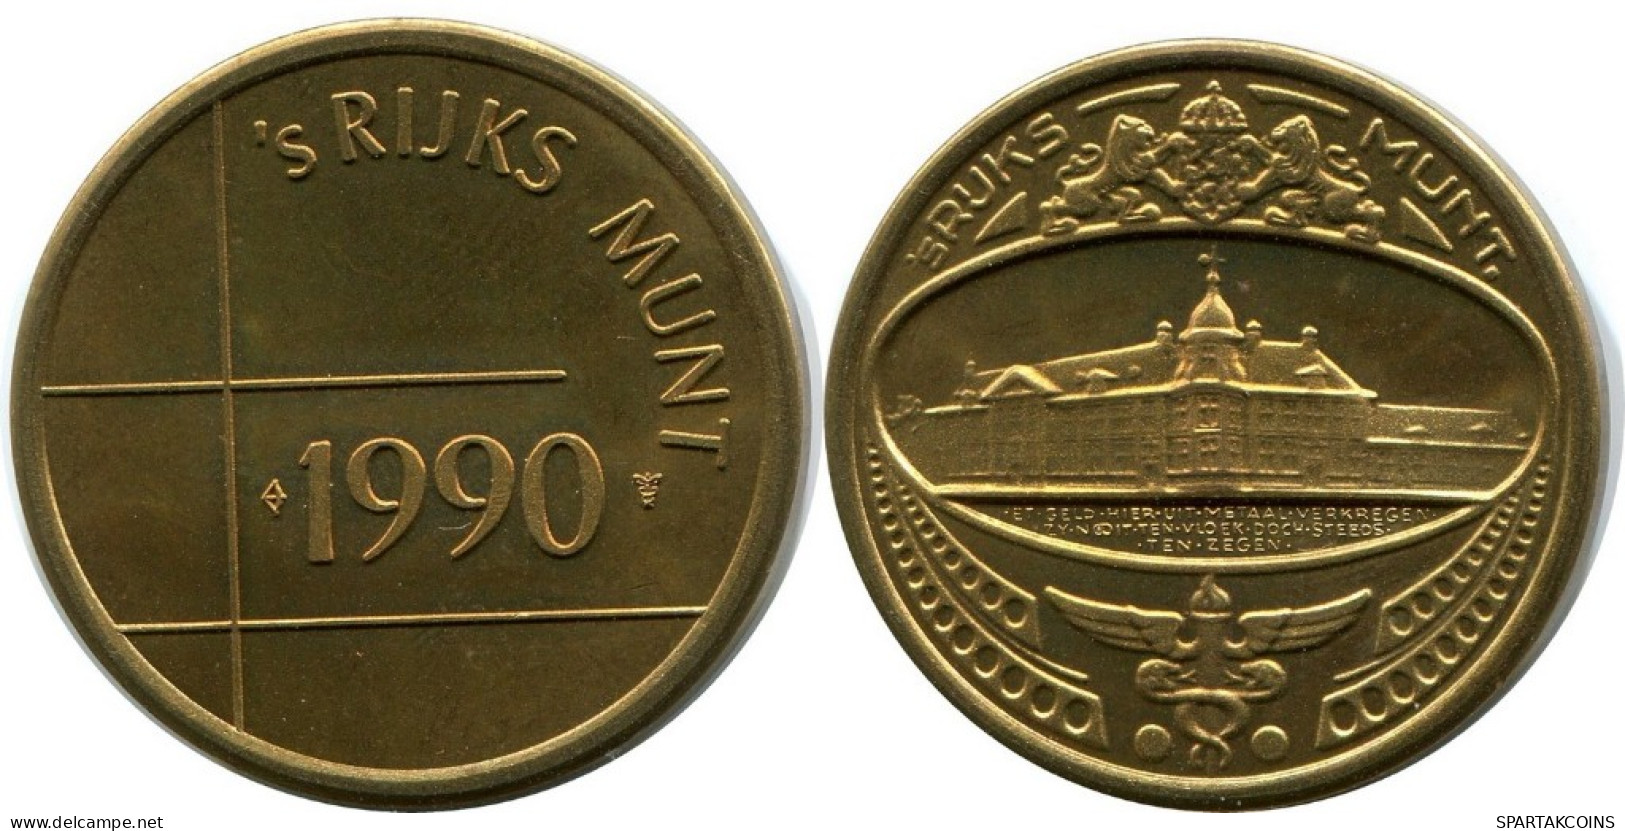 1990 ROYAL DUTCH MINT SET TOKEN NETHERLANDS MINT (From BU Mint Set) #AH029.U.A - Mint Sets & Proof Sets